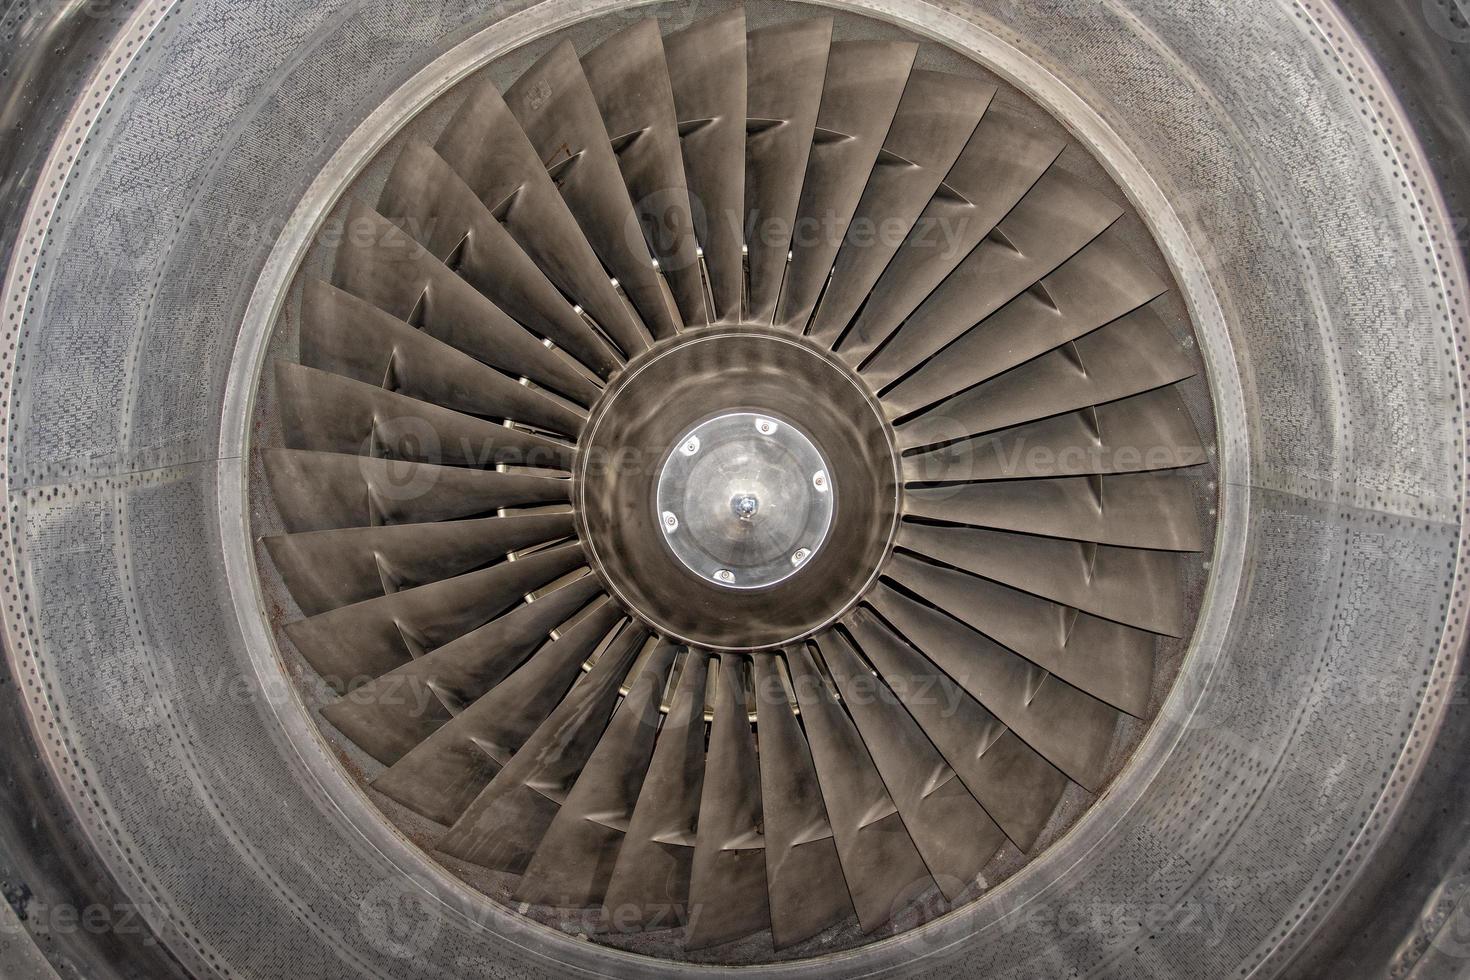 motor de turbina de avião a jato foto